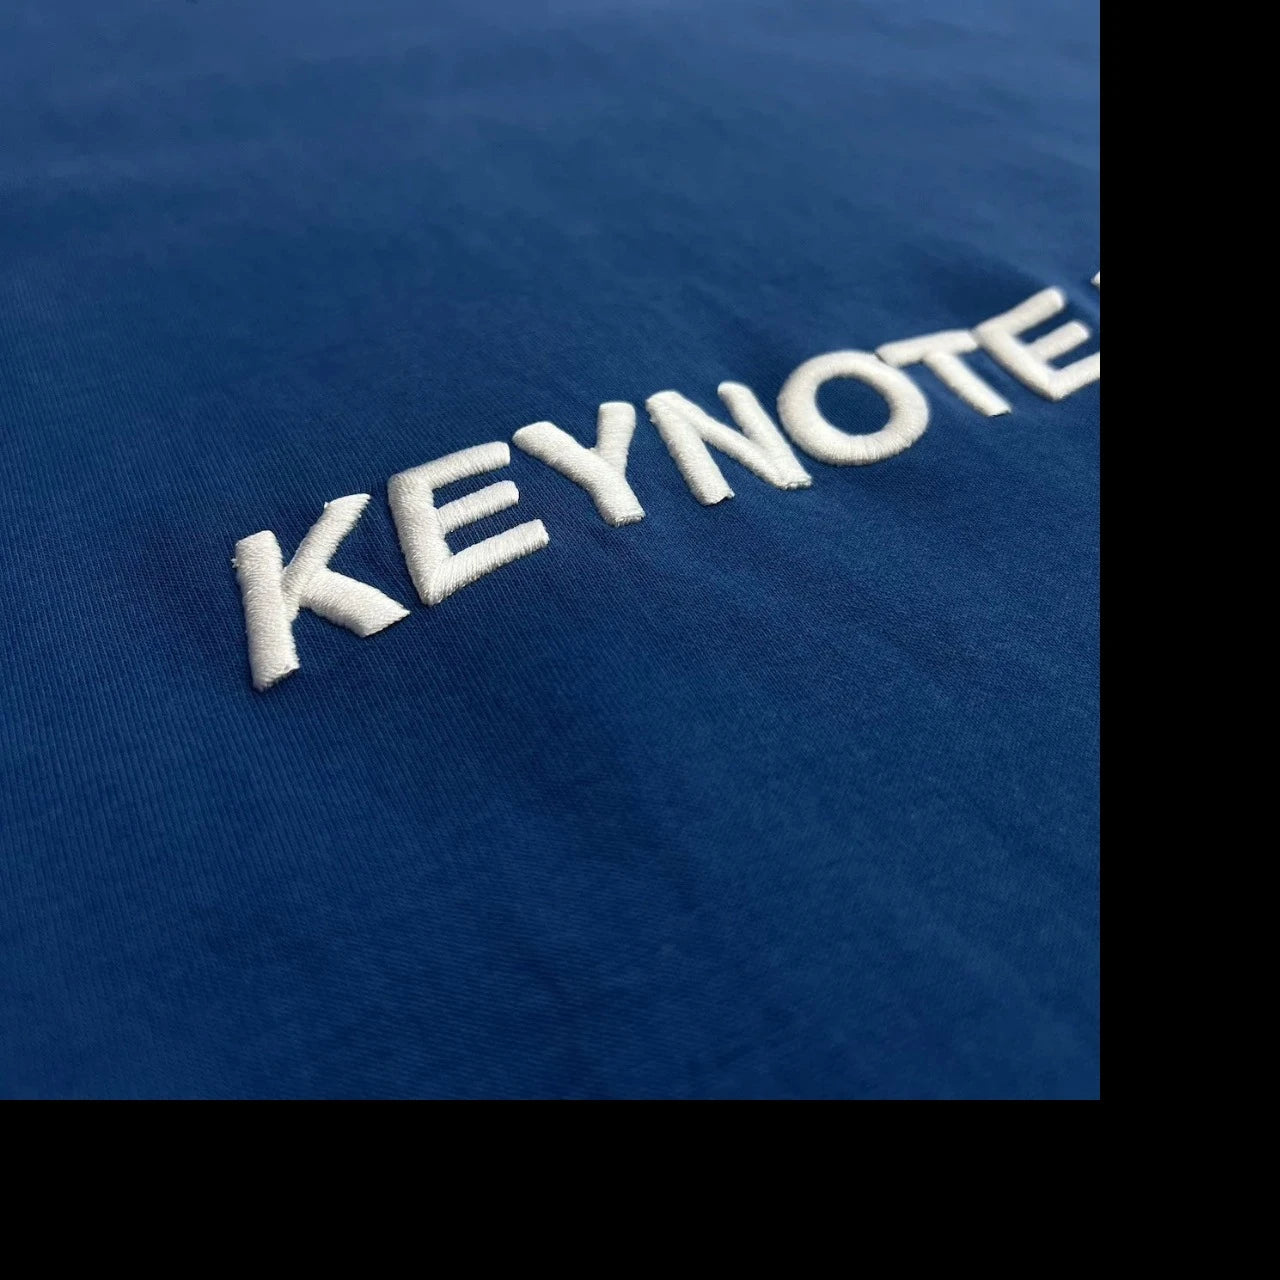 Keynote | Live Your Way Blue